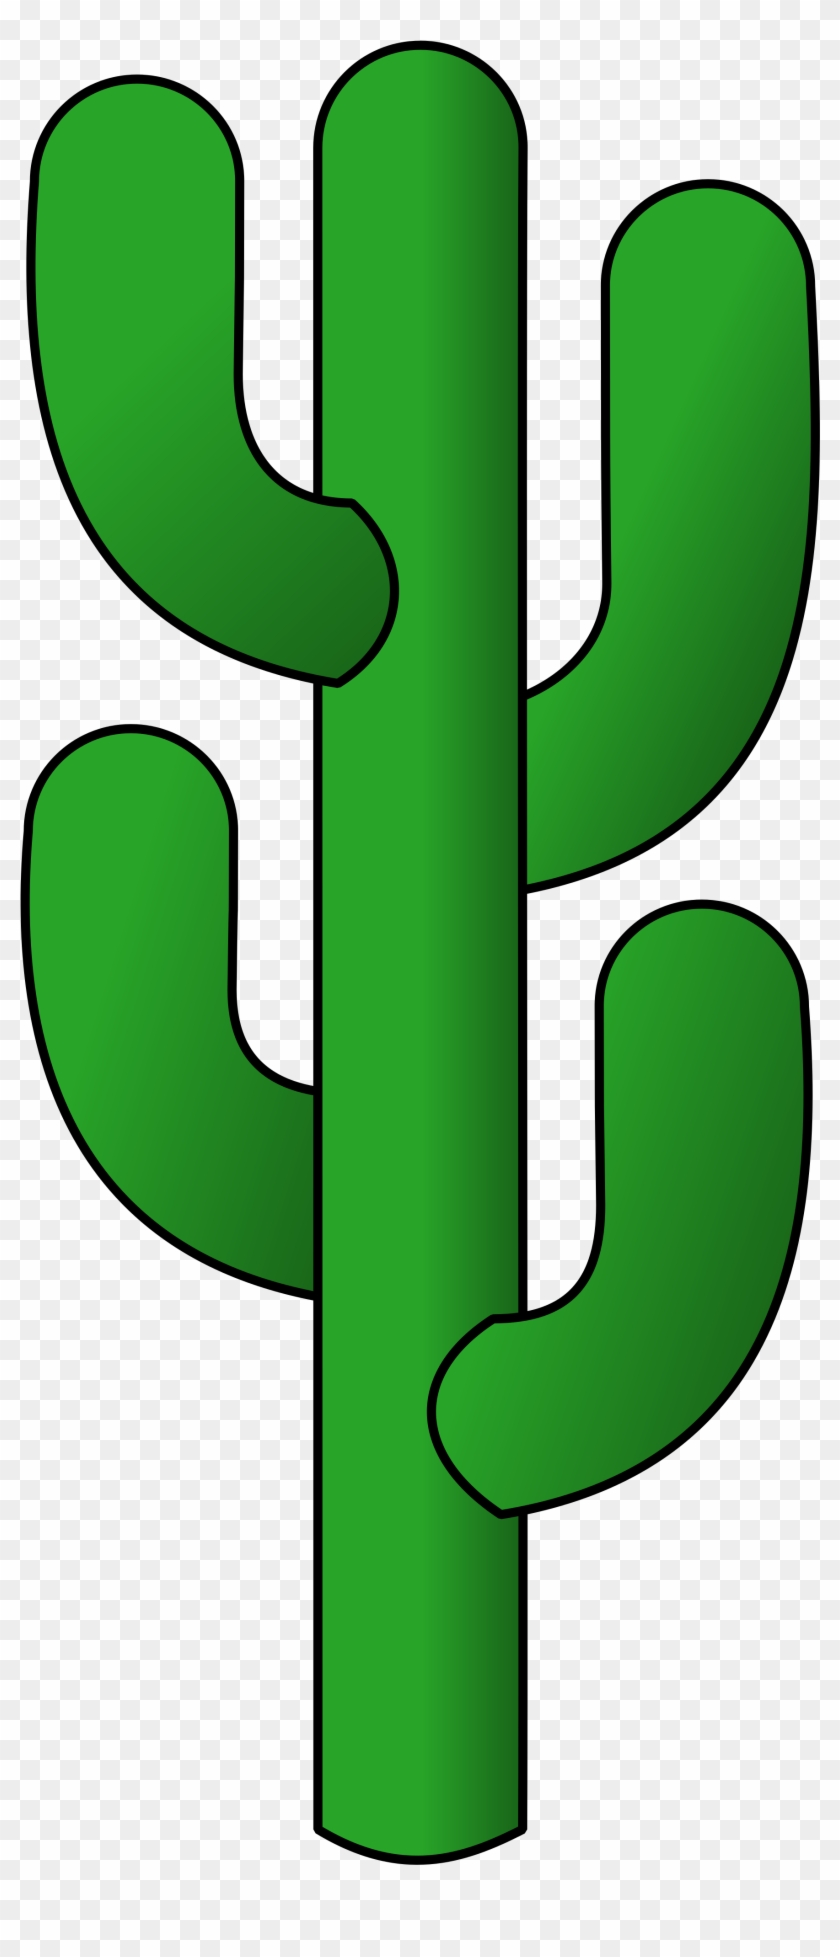 Cactus Png 15, - Dessin Cactus Png #511982